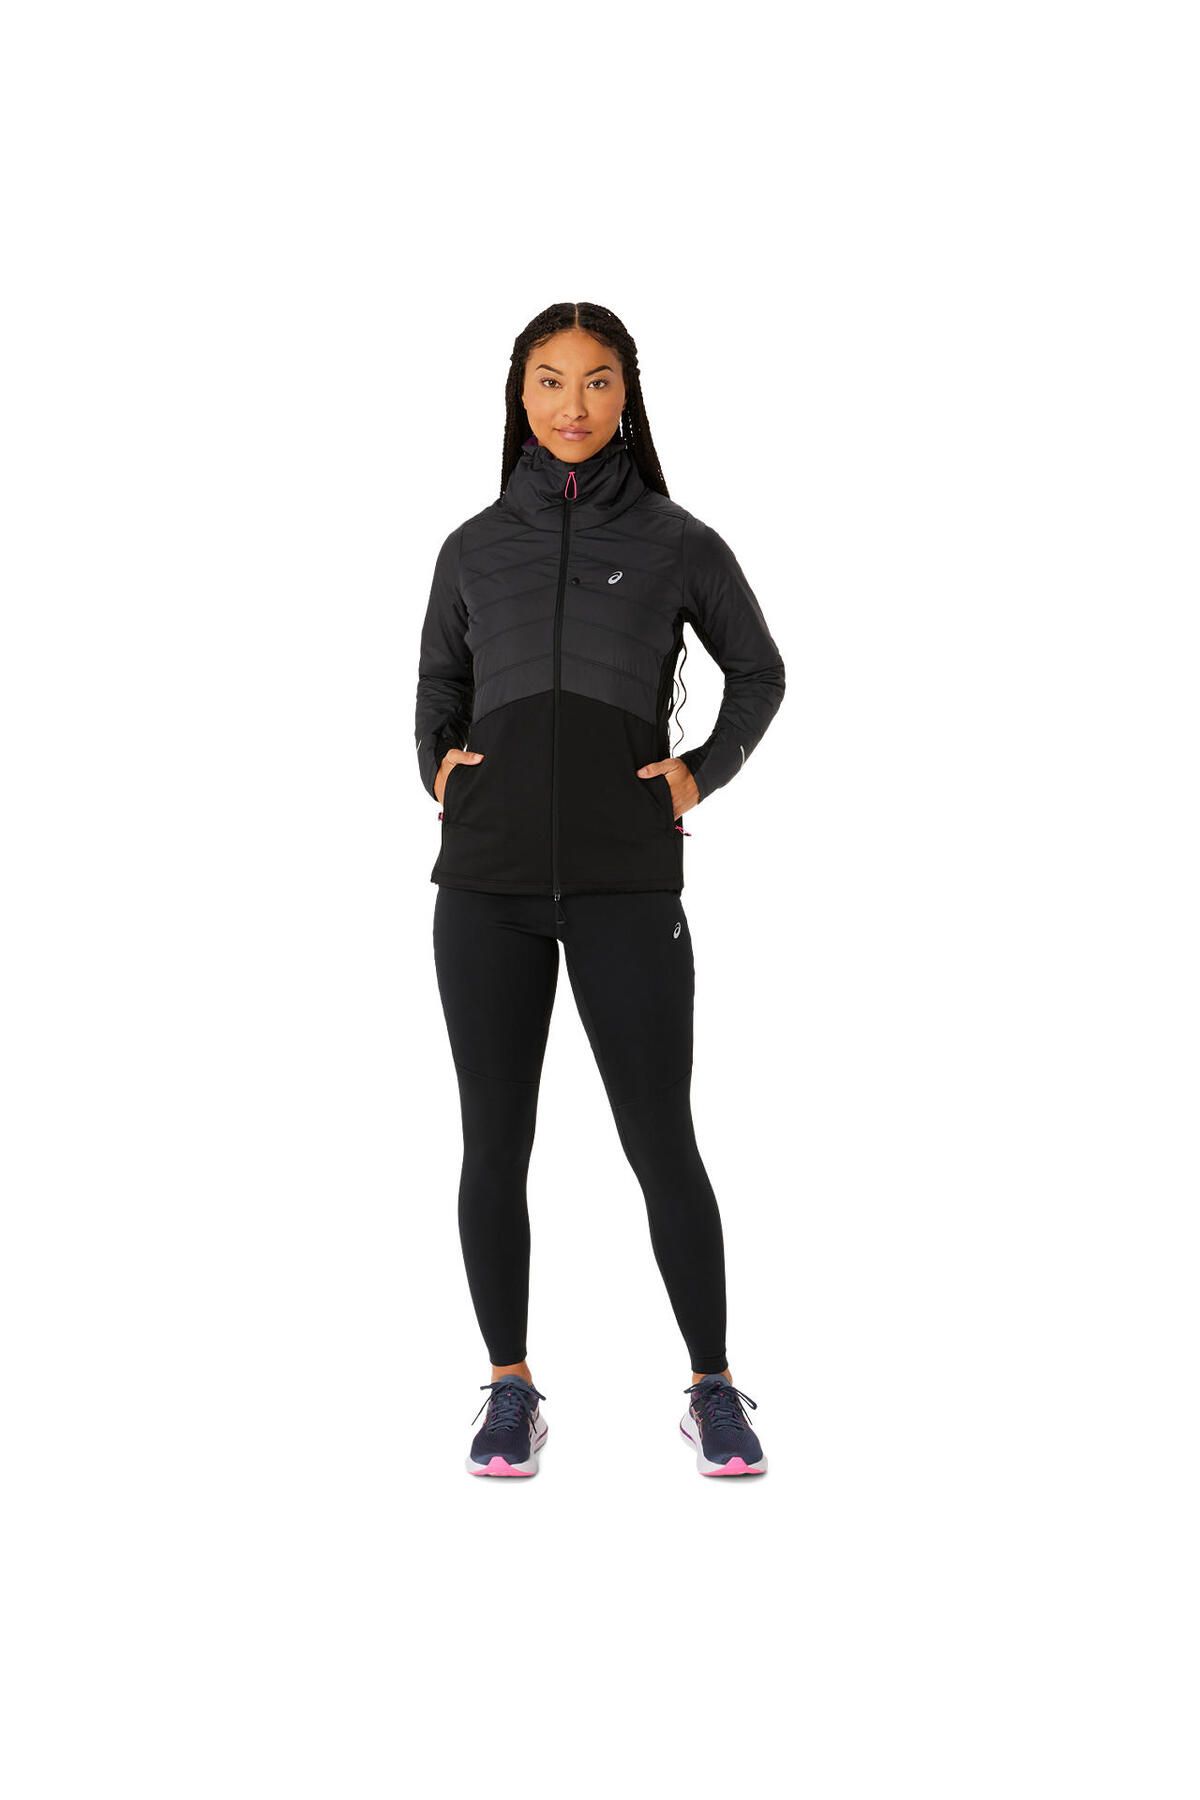 Asics Winter Run Jacket Kadın Siyah Ceket 2012C855-001